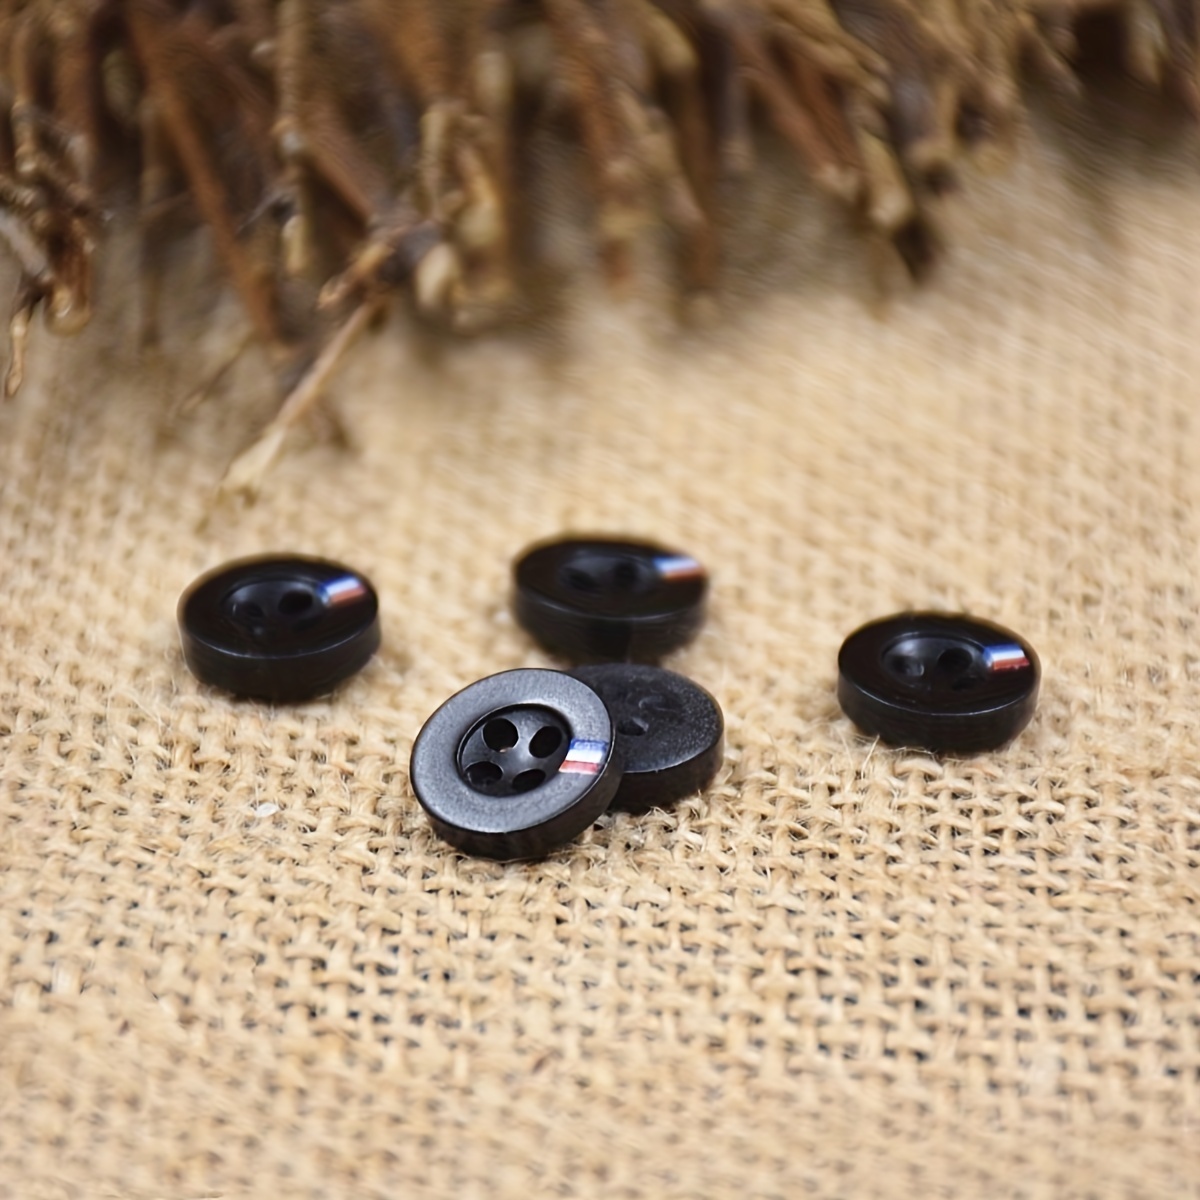 60 botones negros de resina plástica de costura de 1 pulgada para  manualidades, botones negros grandes, 4 agujeros, botones de costura para